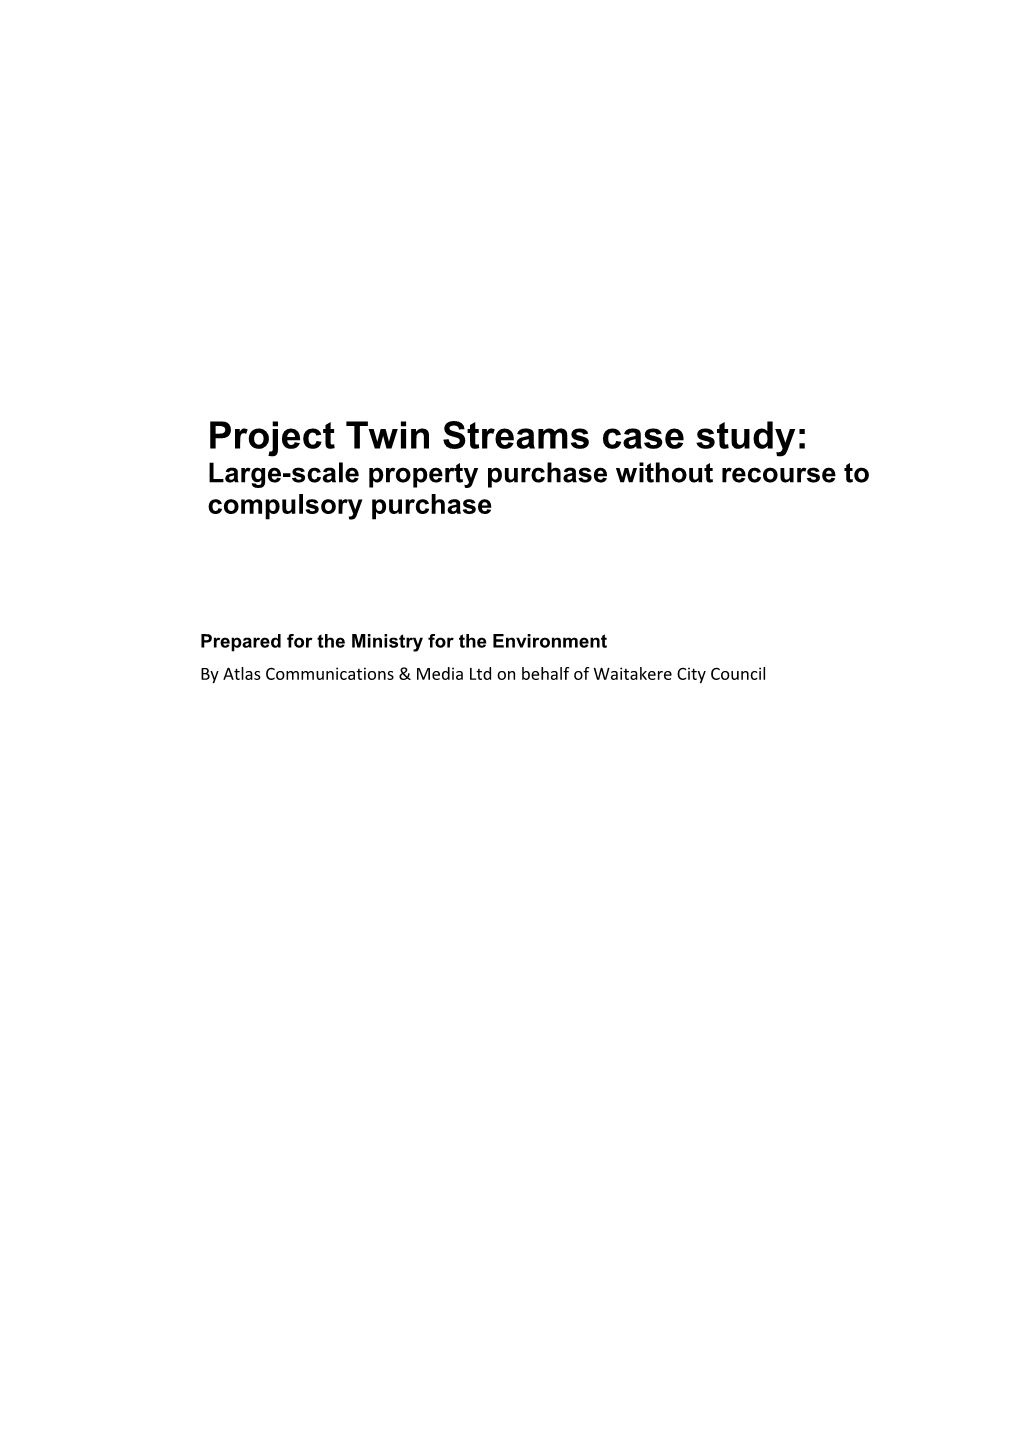 Project-Twin-Streams-Case-Study Final